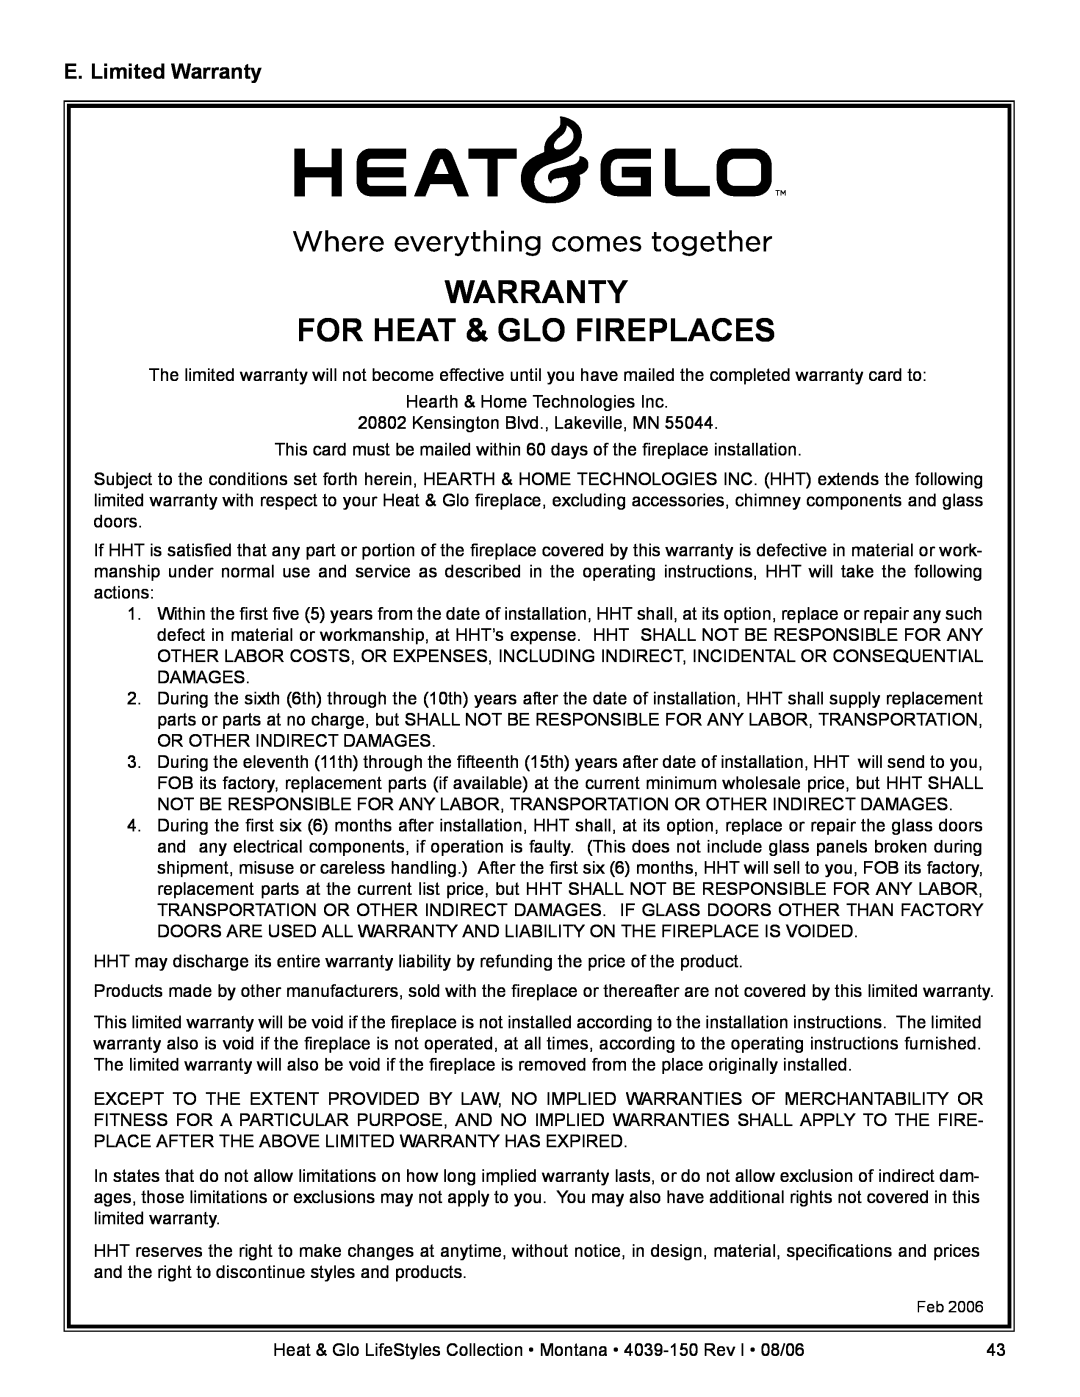 Heat & Glo LifeStyle Montana-36, Montana-42 owner manual Warranty For Heat & Glo Fireplaces, E. Limited Warranty 